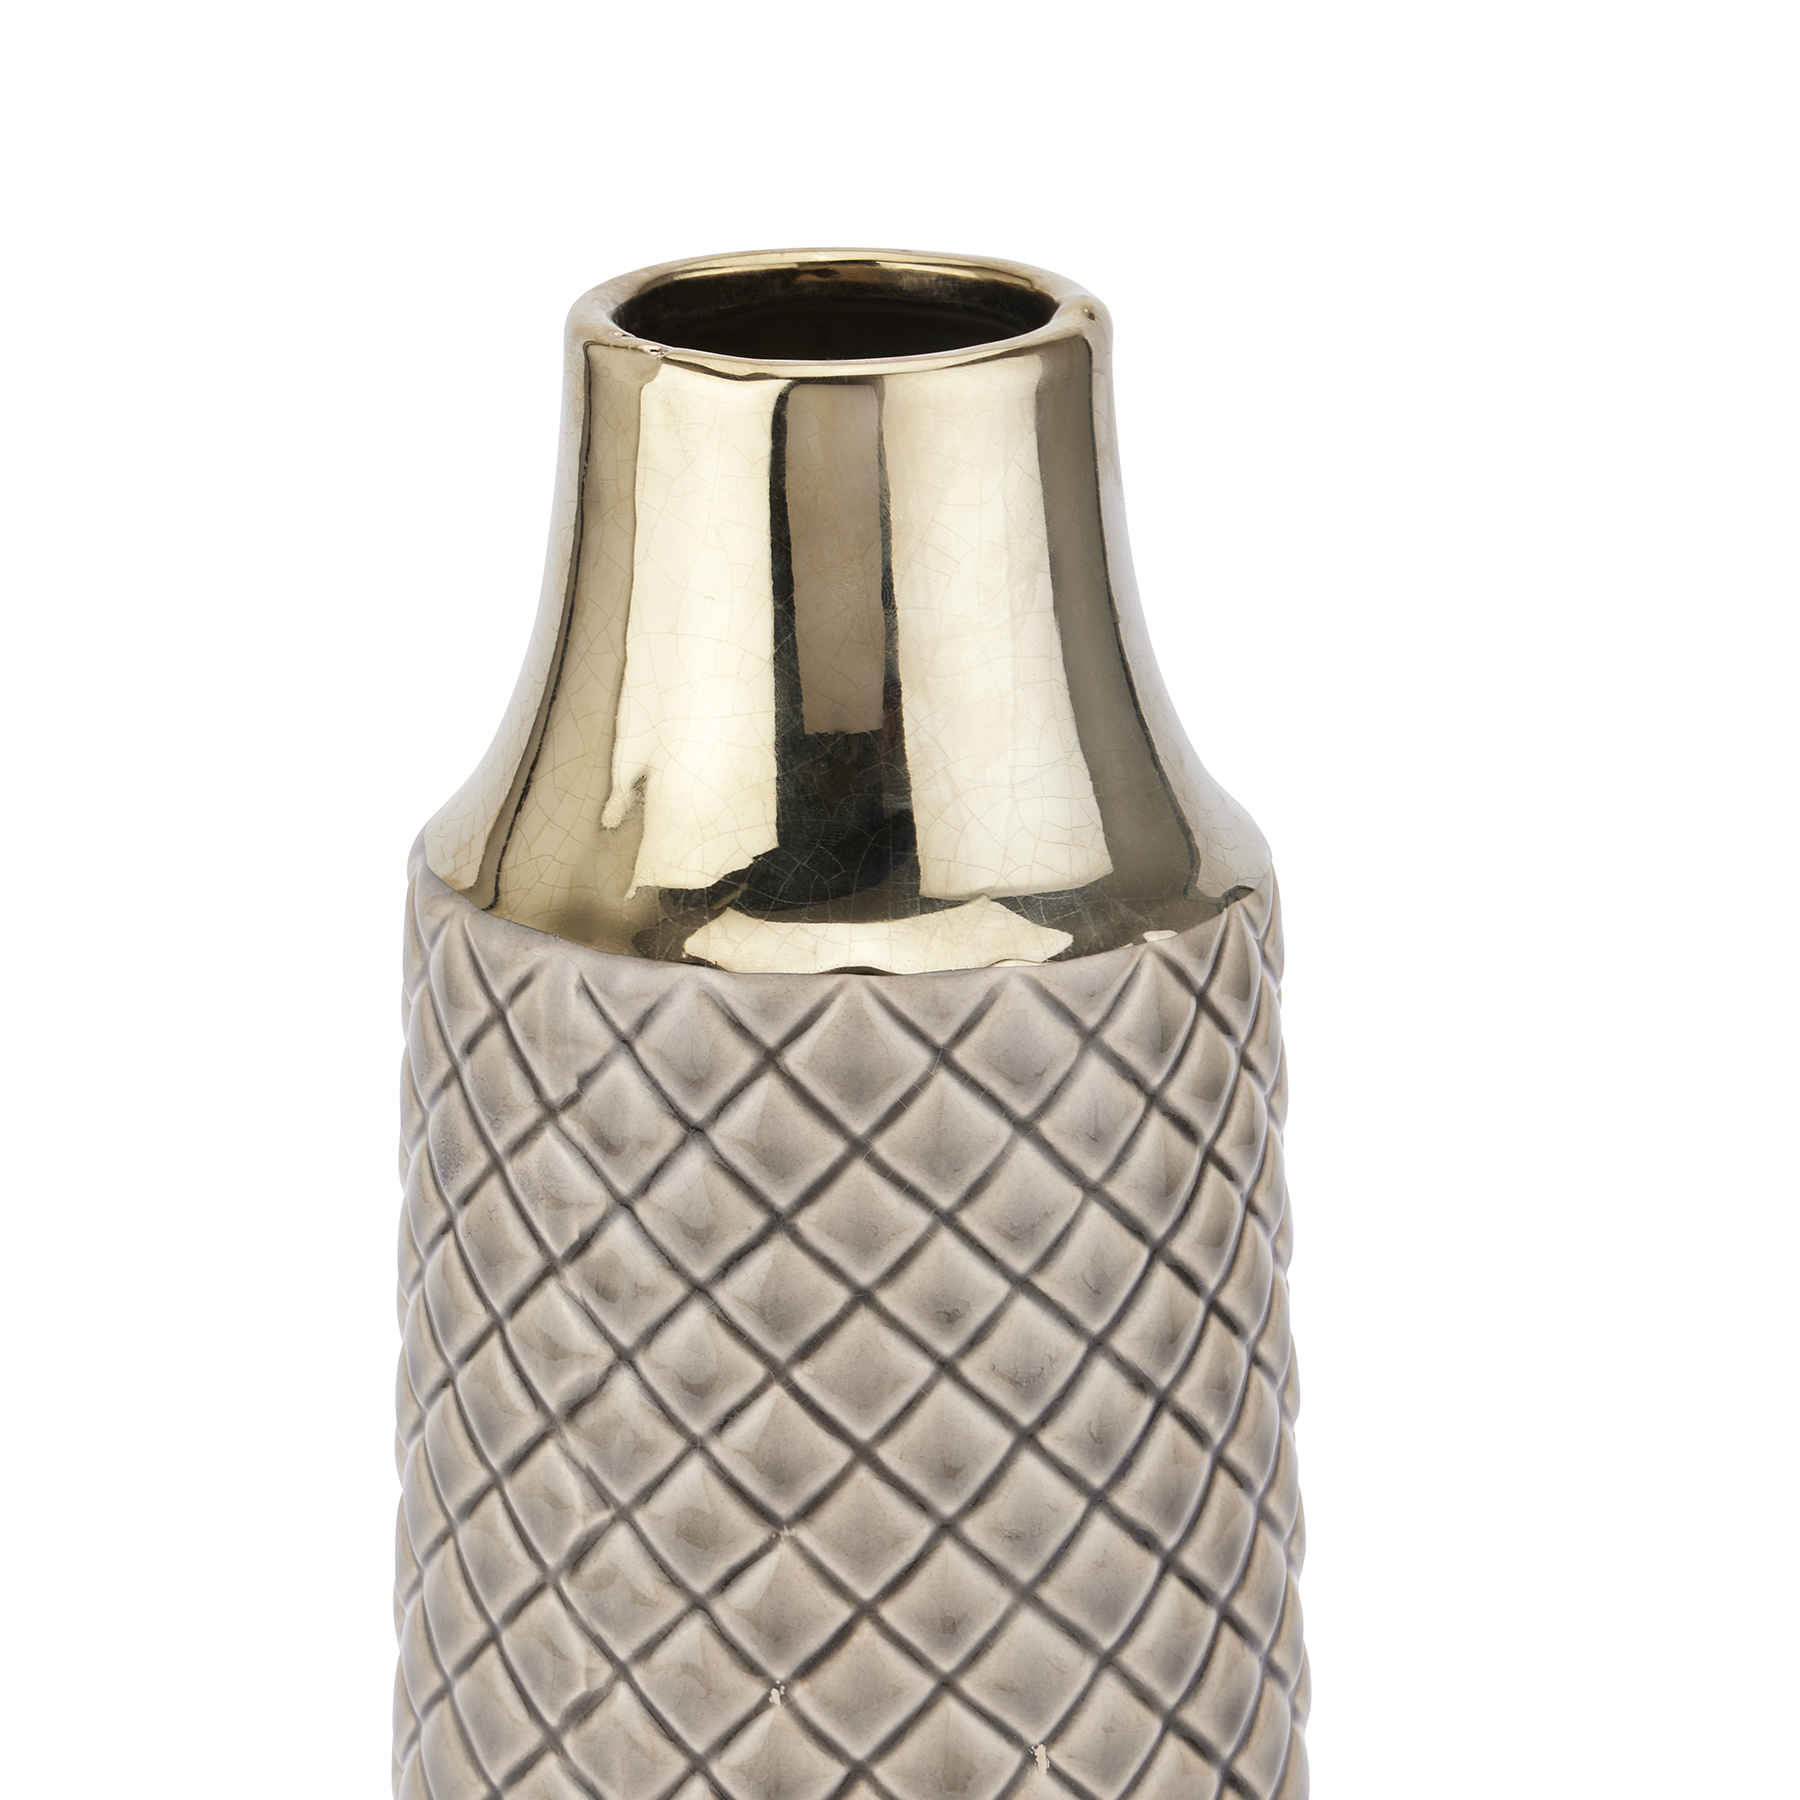 Seville Collection Diamond Vase - Image 2